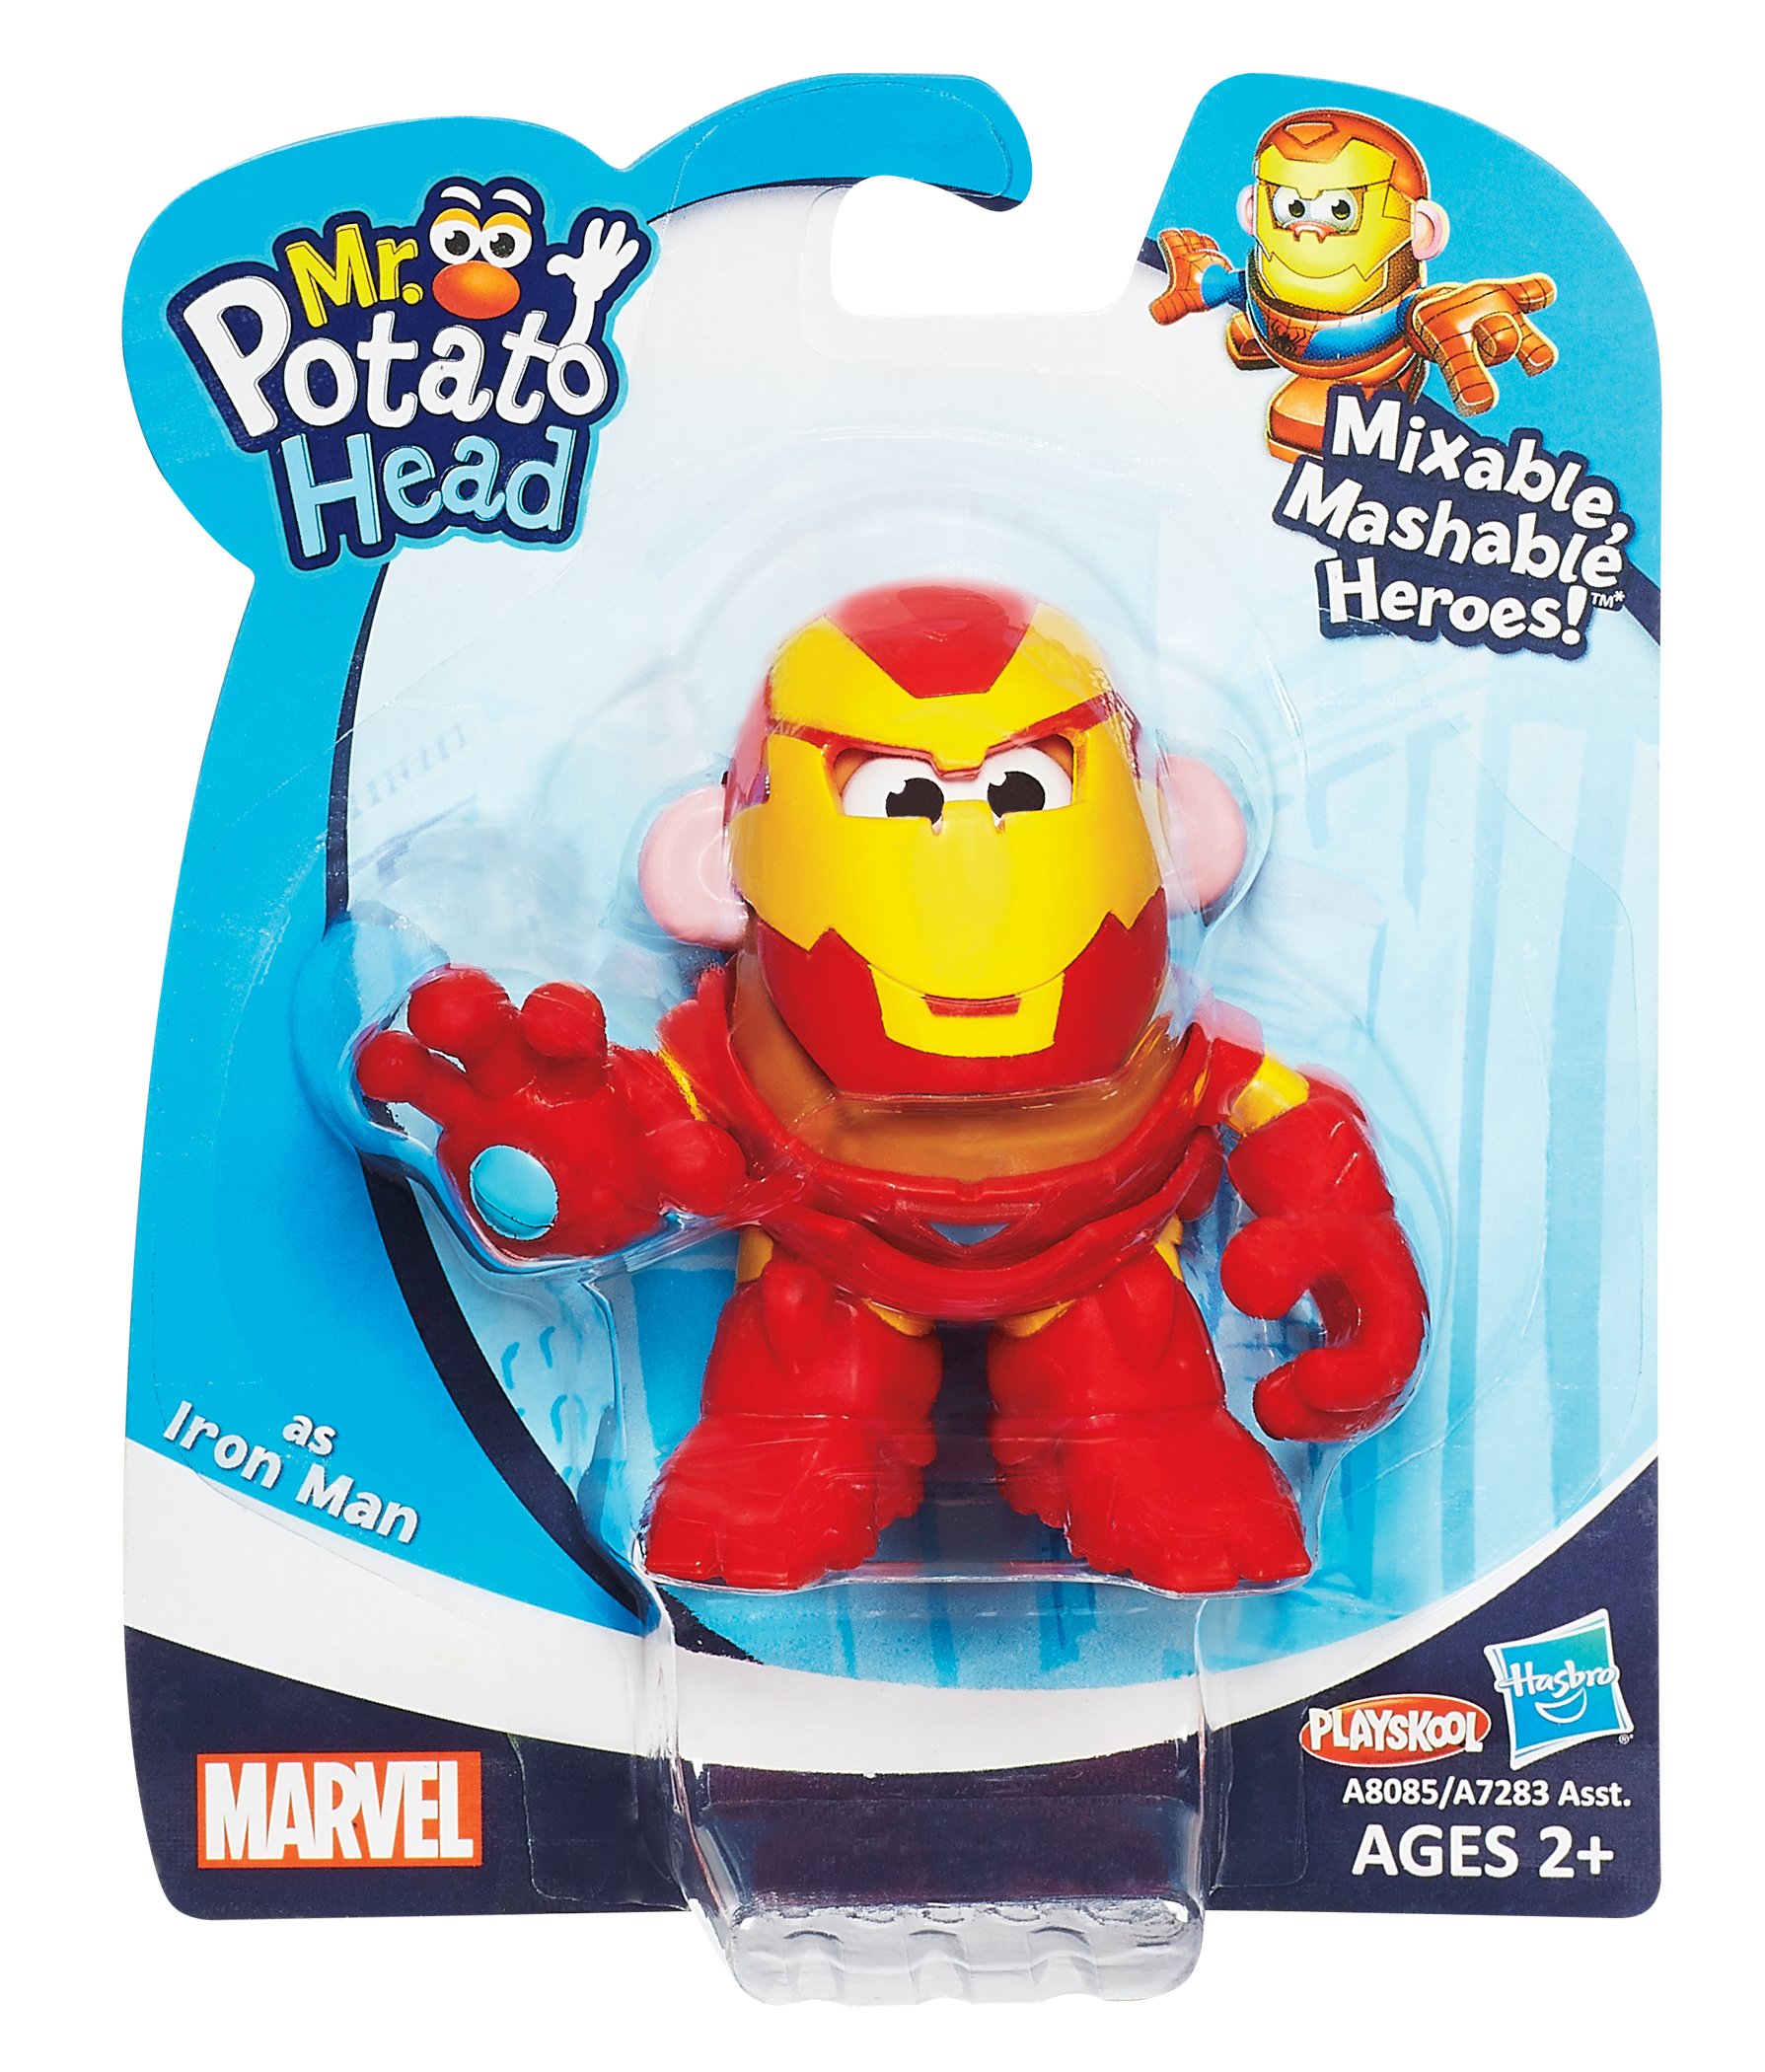 Hasbro Mr. Potato Head Marvel Mixable, Mashable Heroes